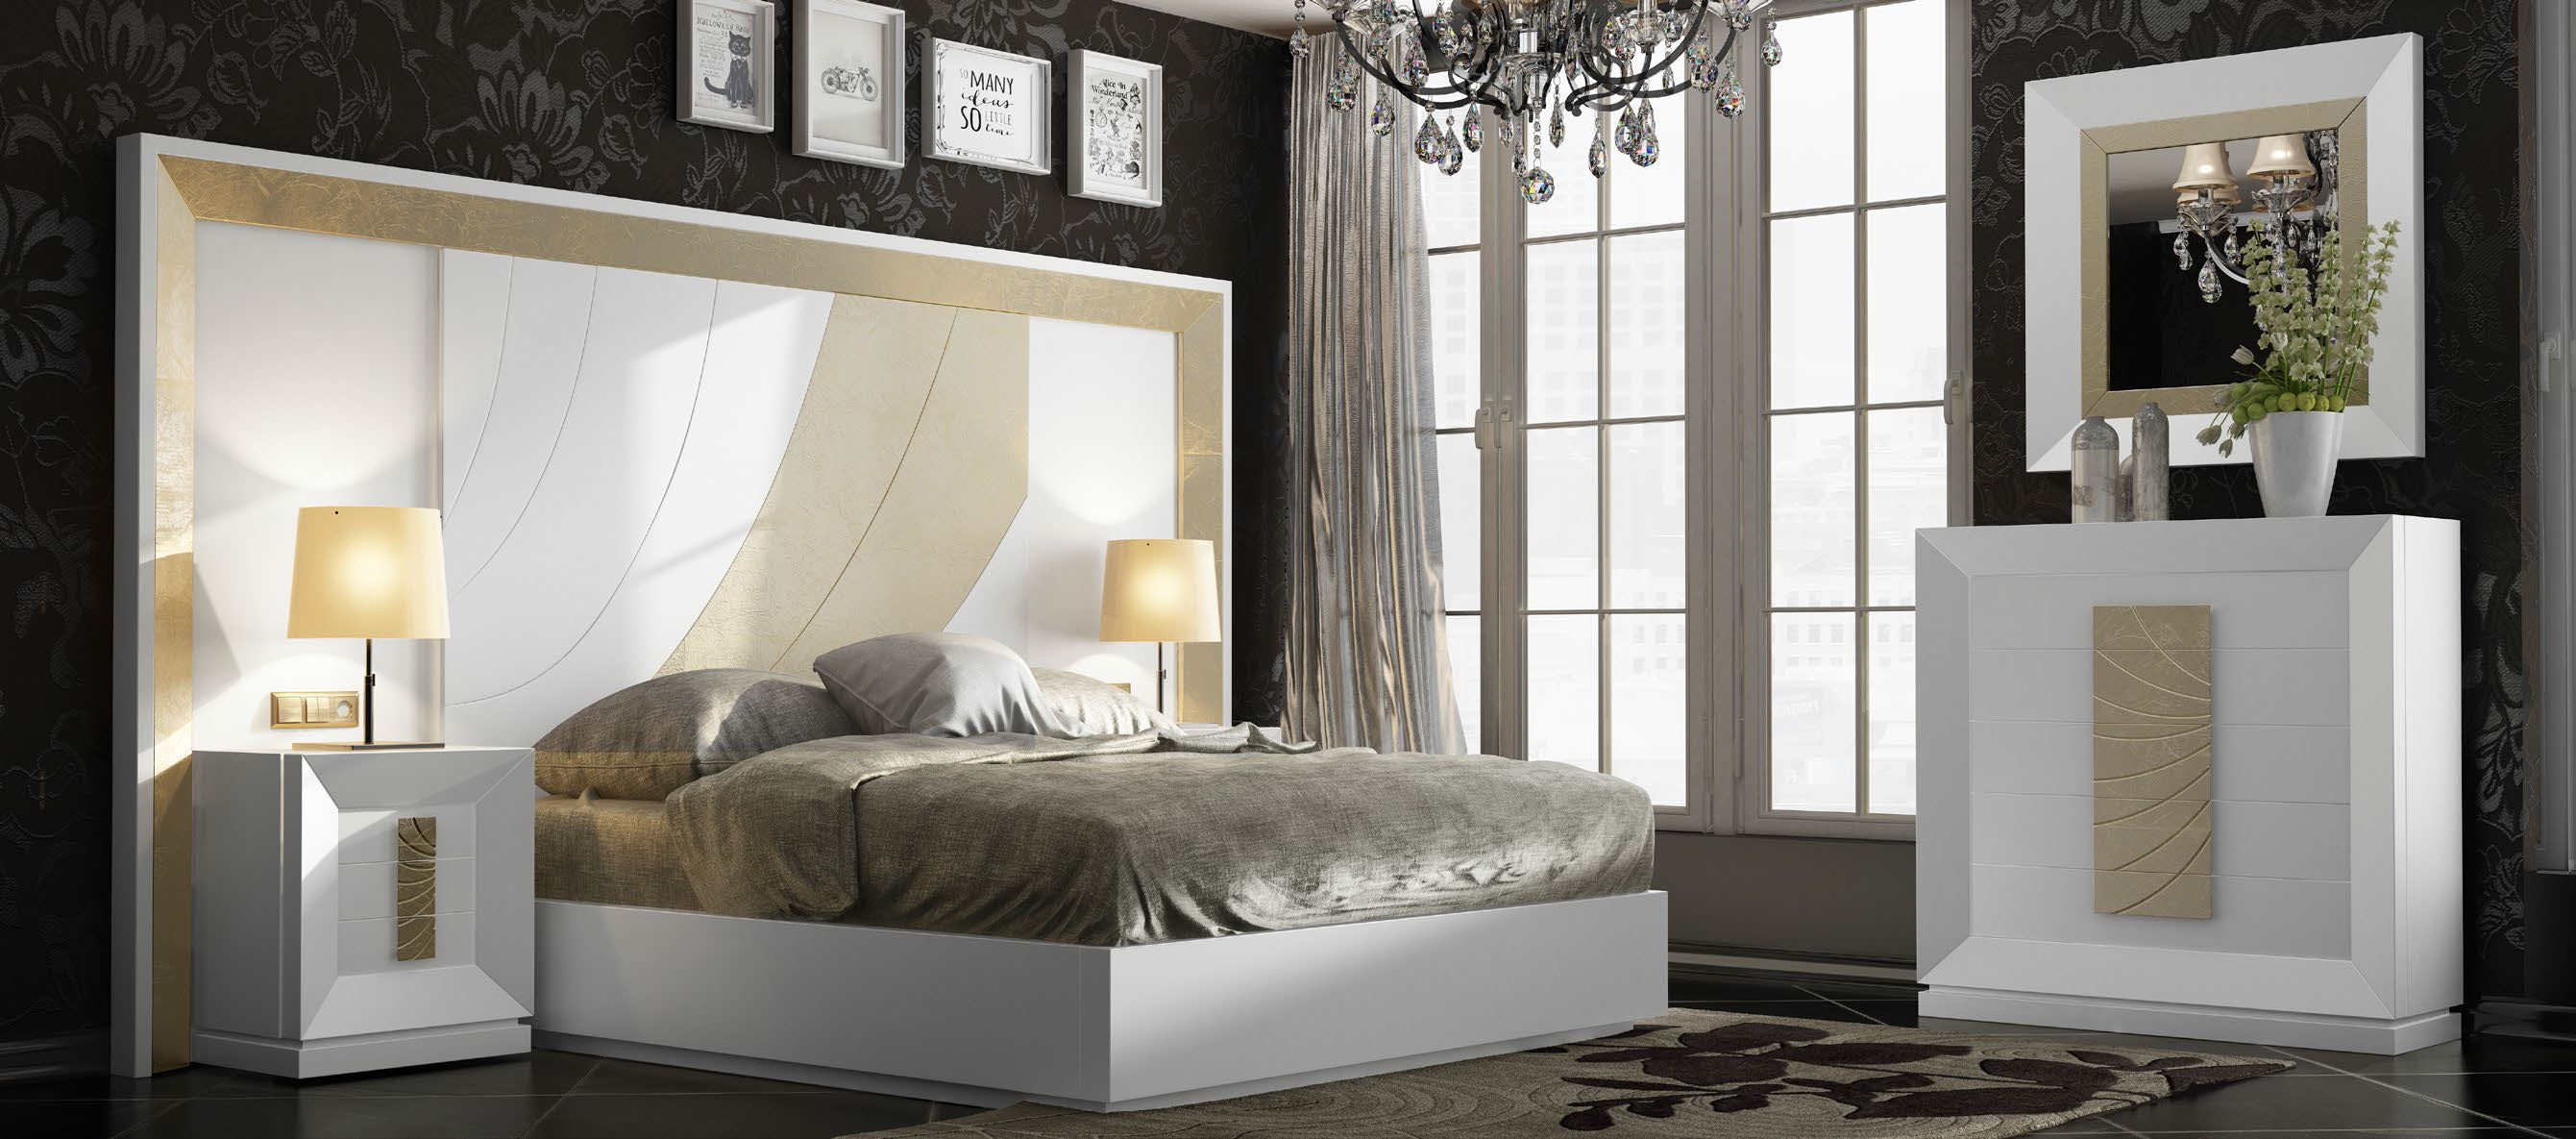 Brands Franco Furniture Bedrooms vol3, Spain DOR 130